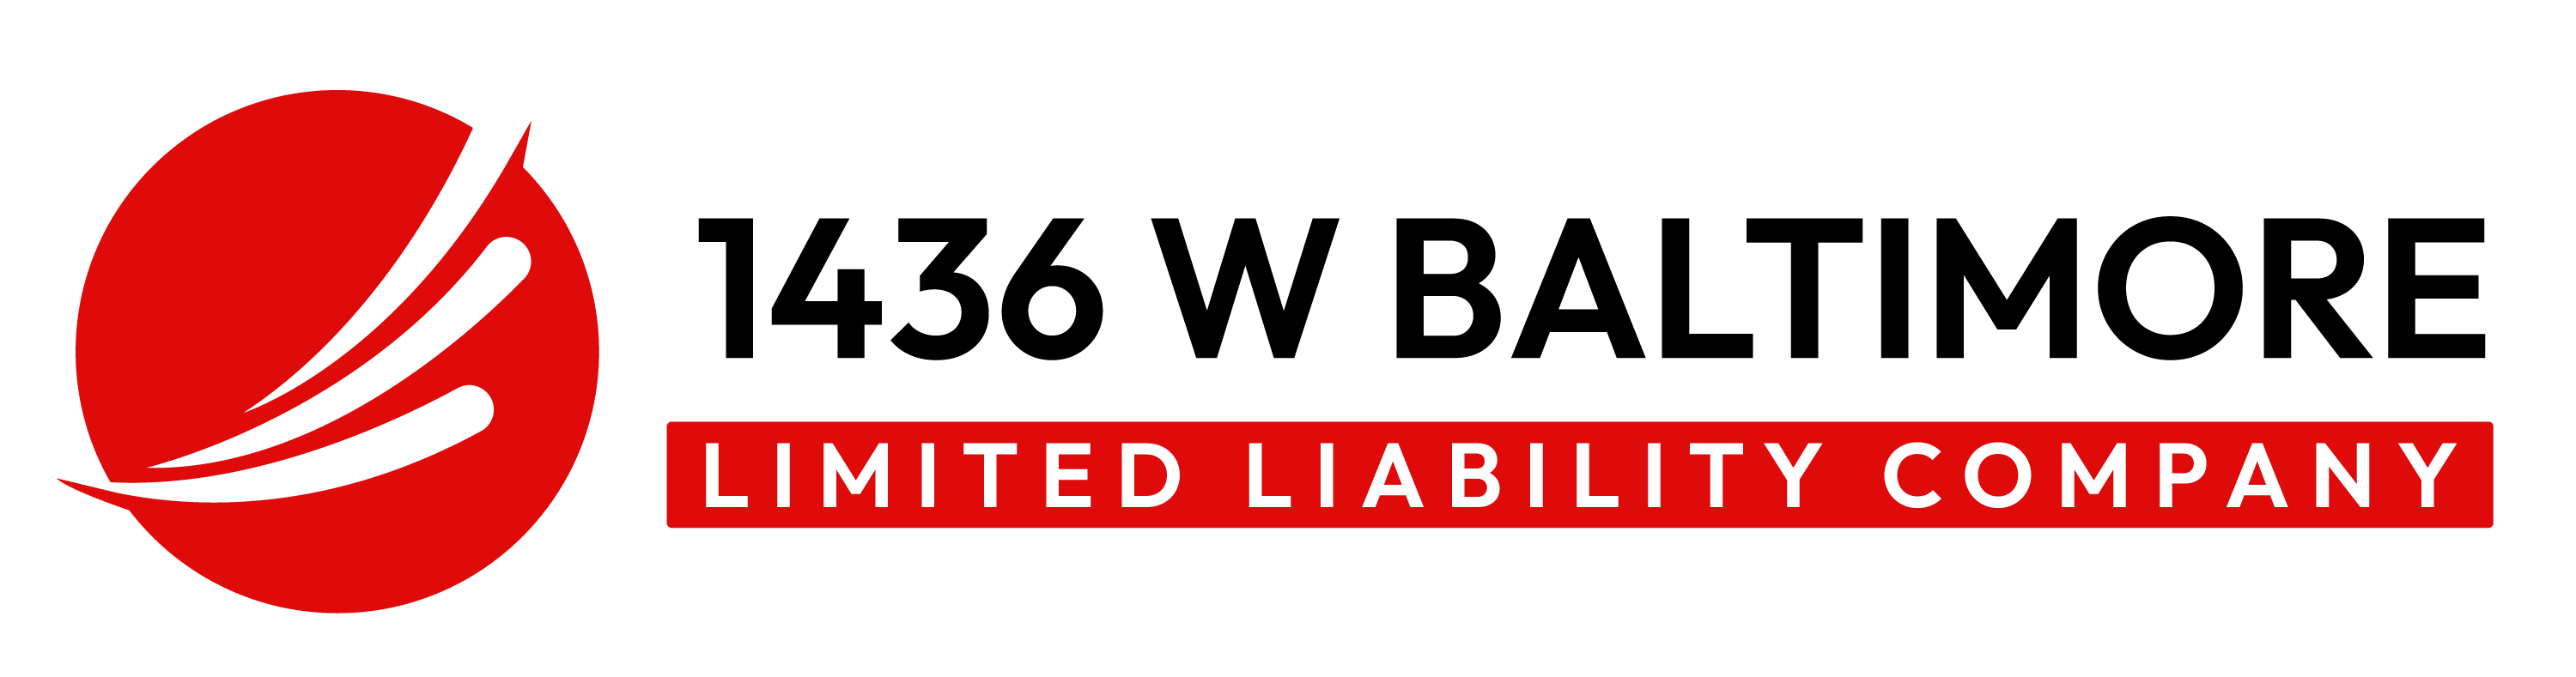 1436 w baltimore limited liability company